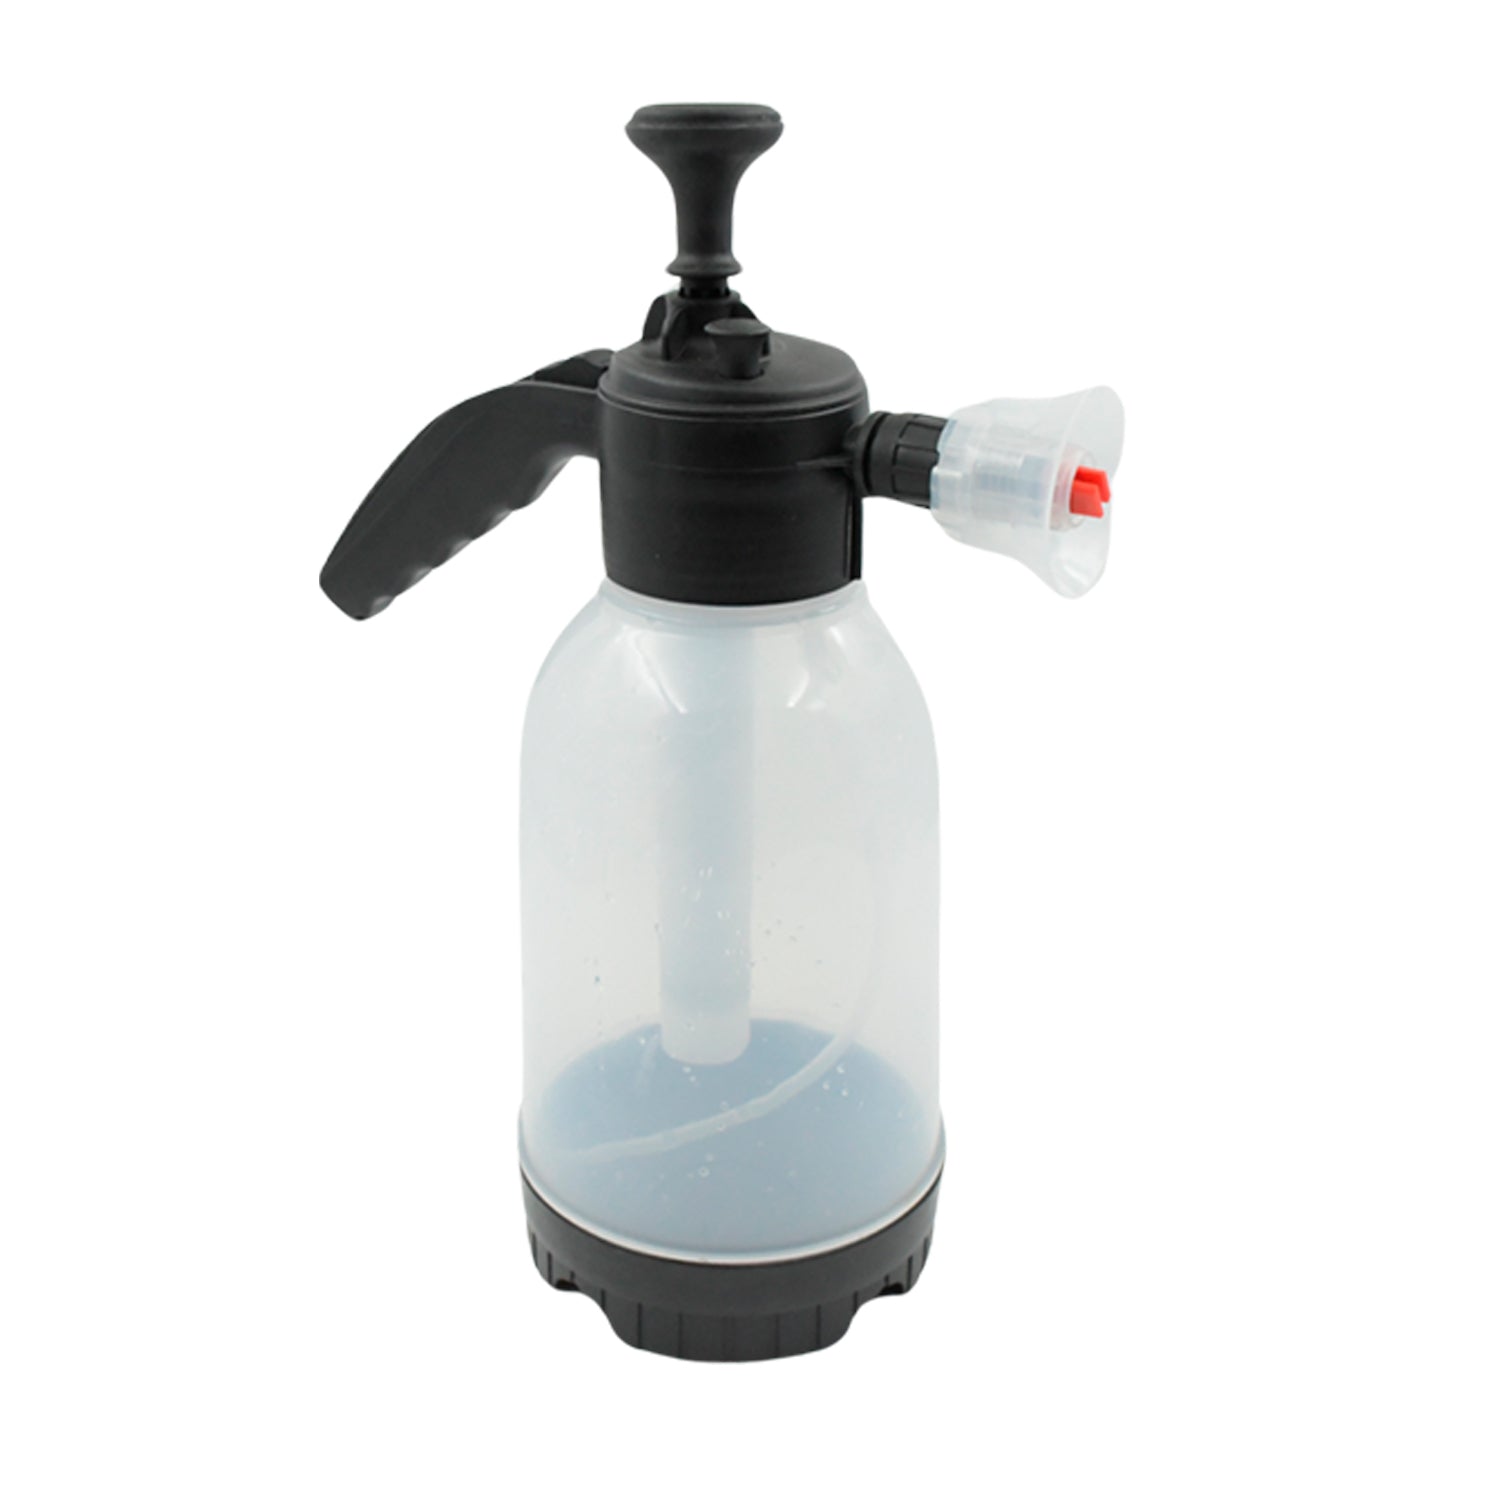 9324 Pressure Sprayer 2 Litres Garden Sprayer Hand Pump Sprayer Foam Sprayer Watering Bottle for Indoor Plants Cleaning Outdoor Garden (2 Ltr.)